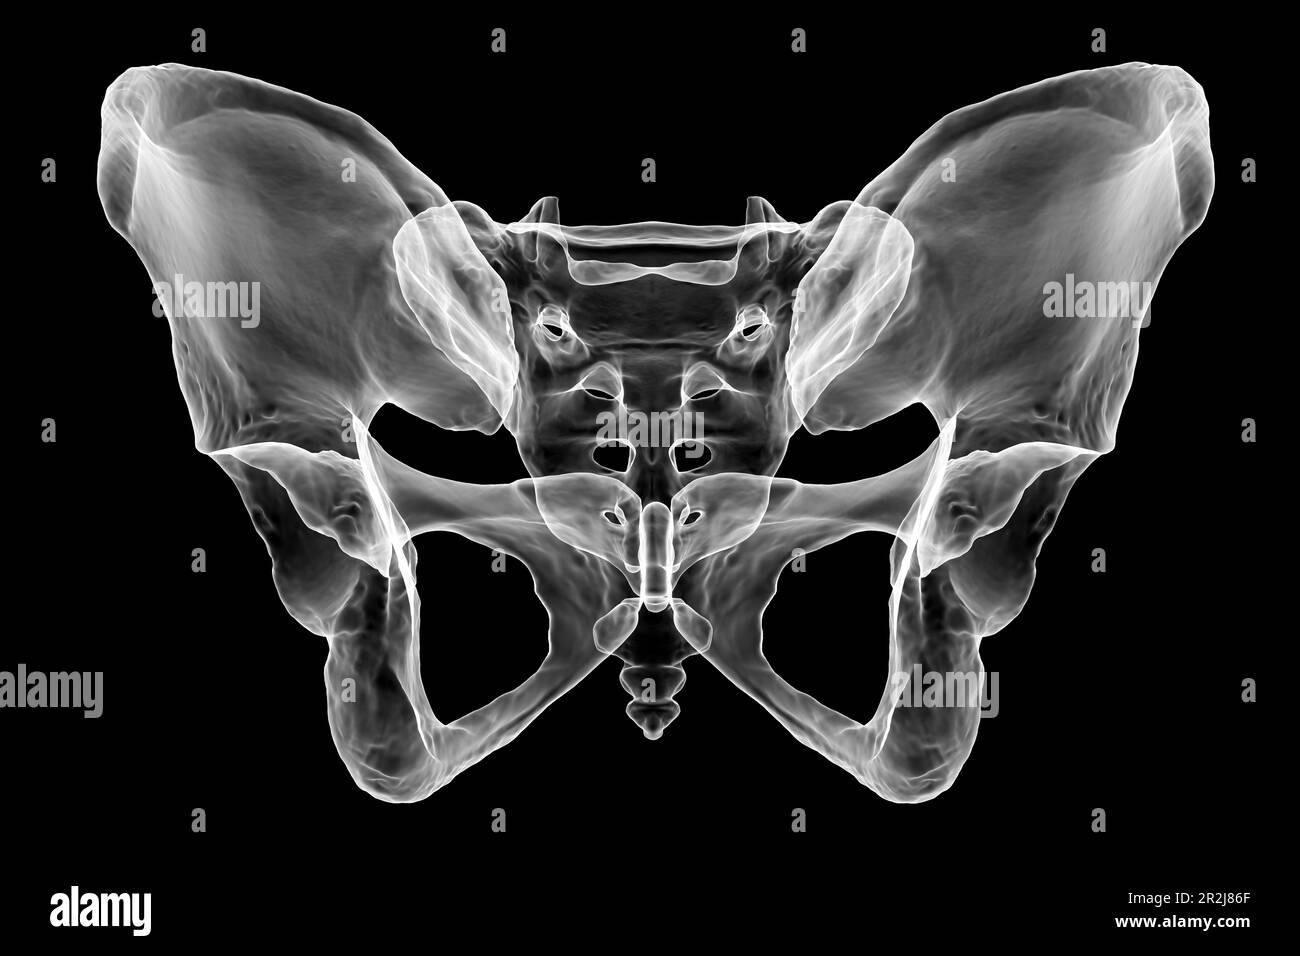 Anatomy of the pelvis bones, illustration Stock Photo - Alamy